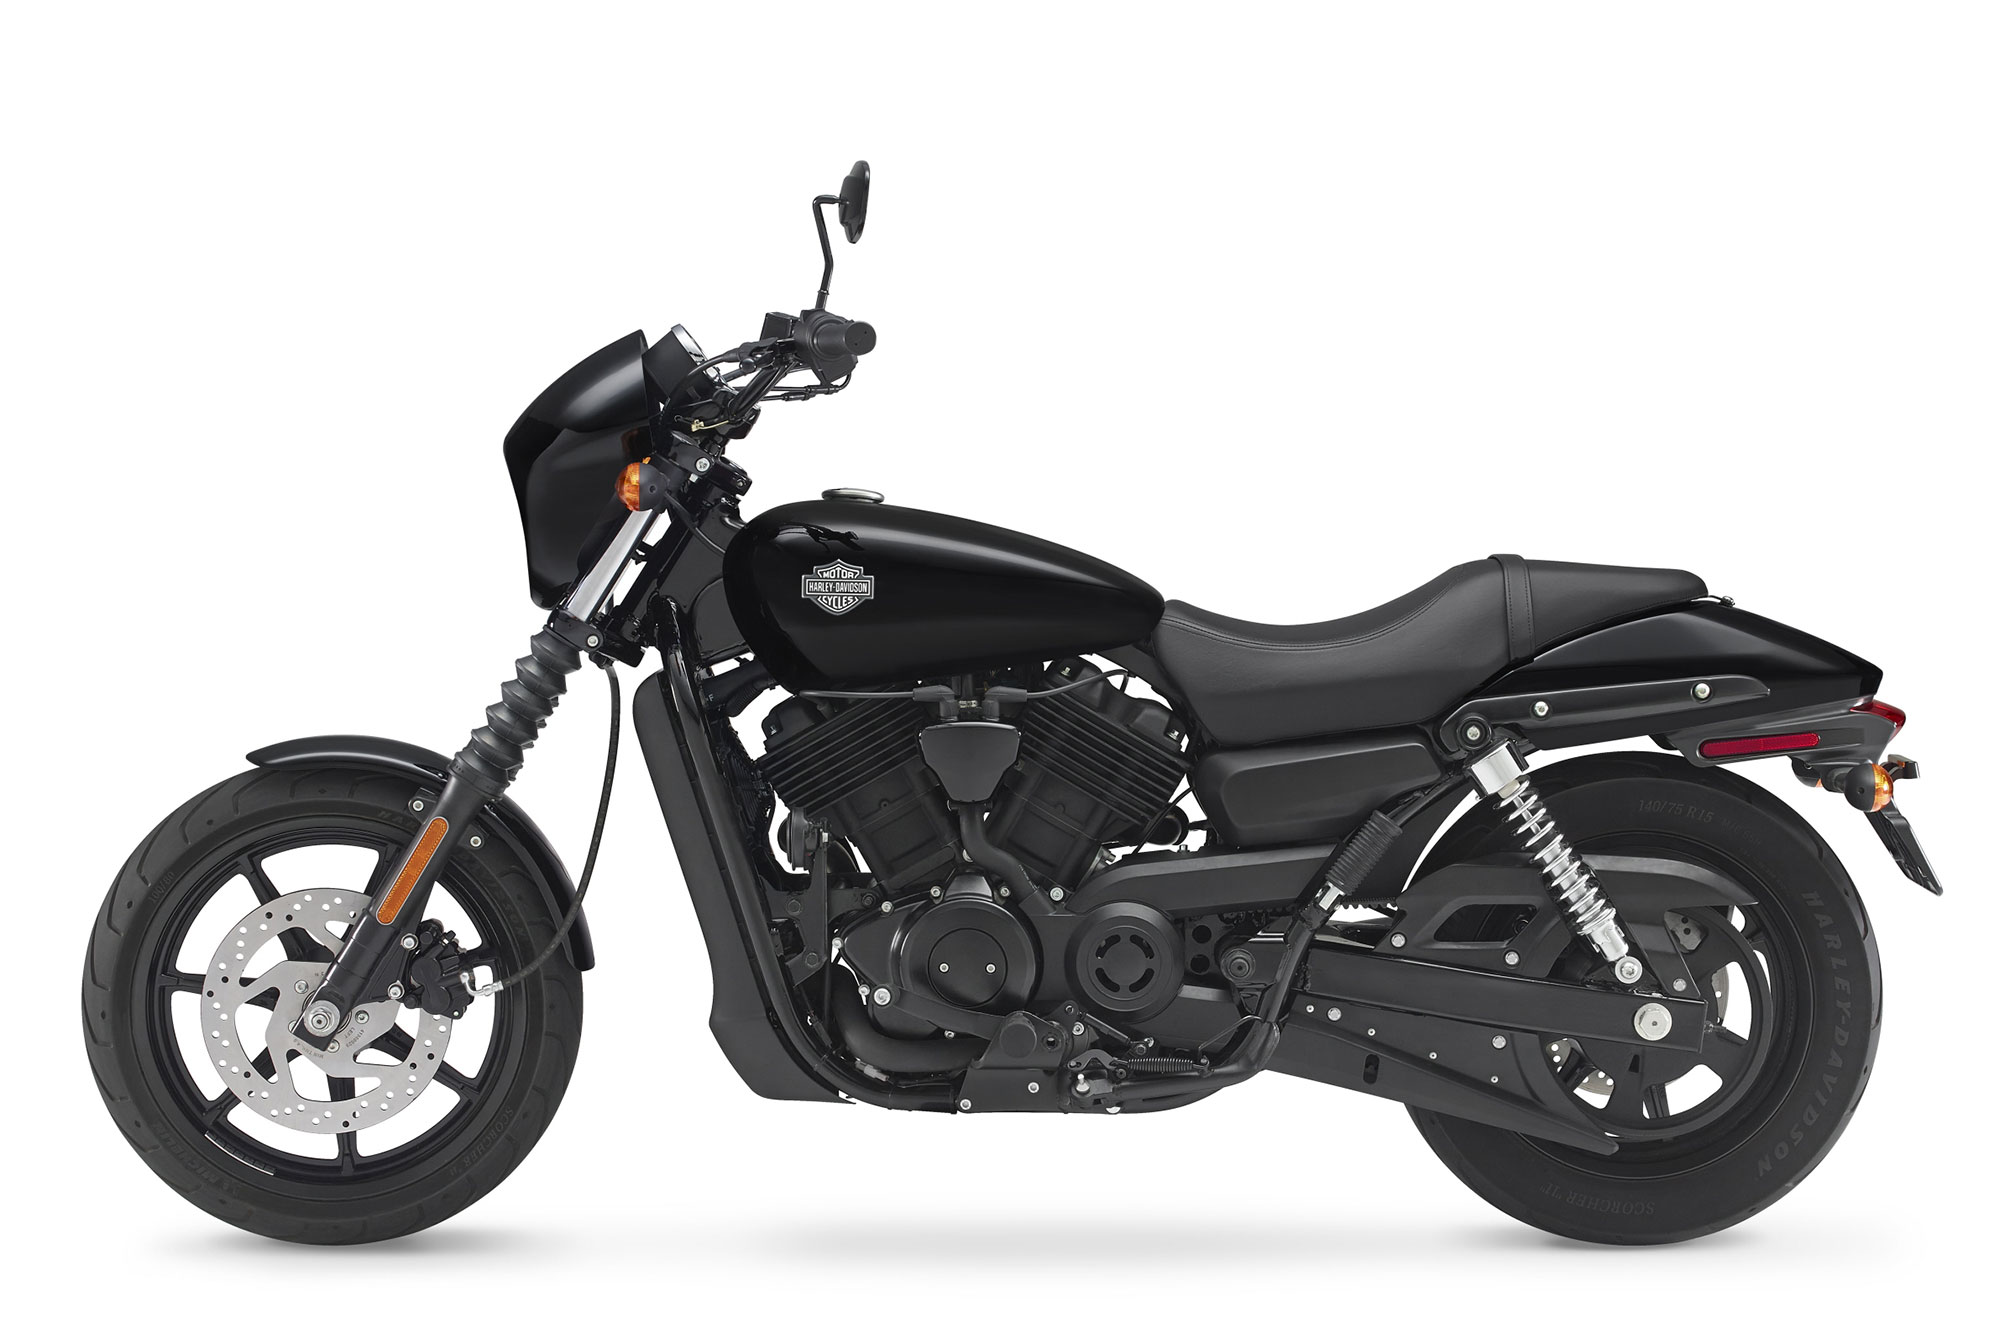 2015 Harley Davidson Street Xg500 Review